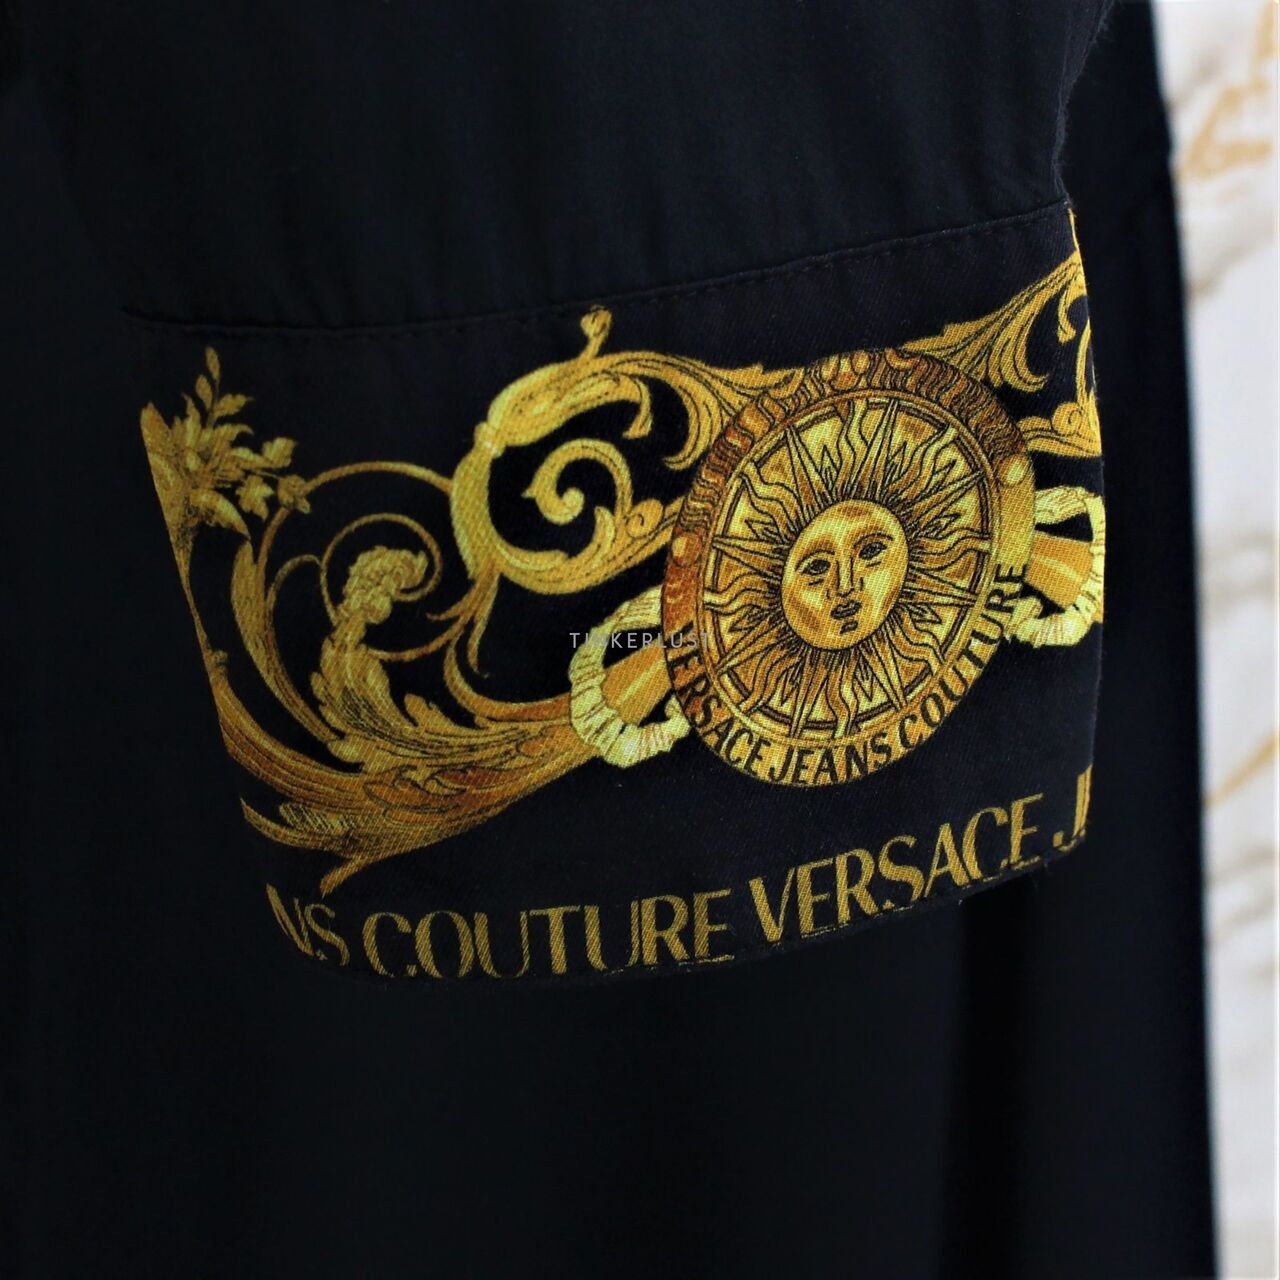 Versace Jeans Couture Black Print Detail Shirt